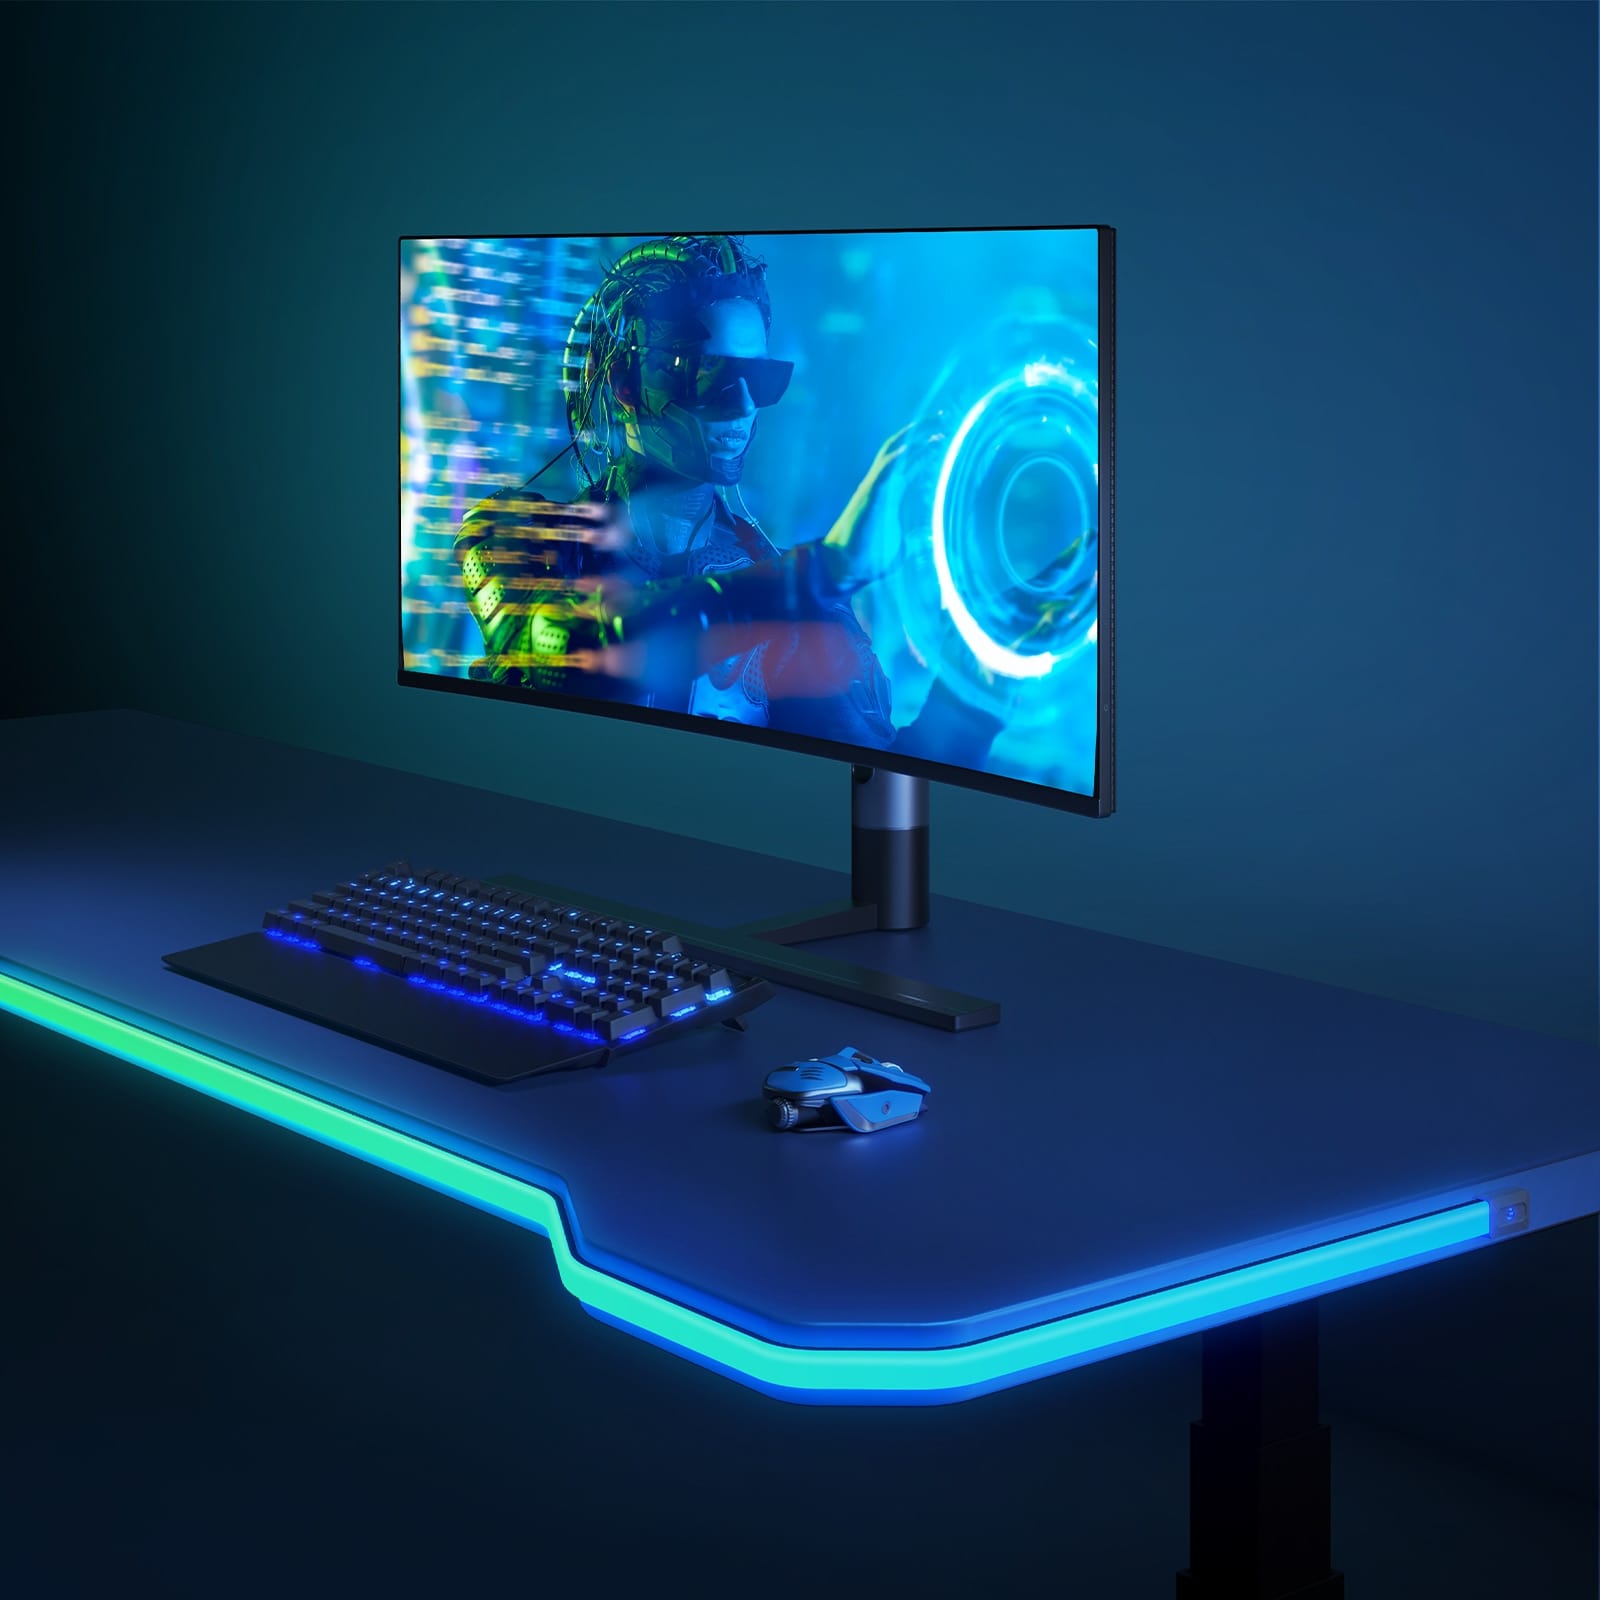 GOVEE LED-Strip Neon Gaming Table Light, EEK: G, 2 m